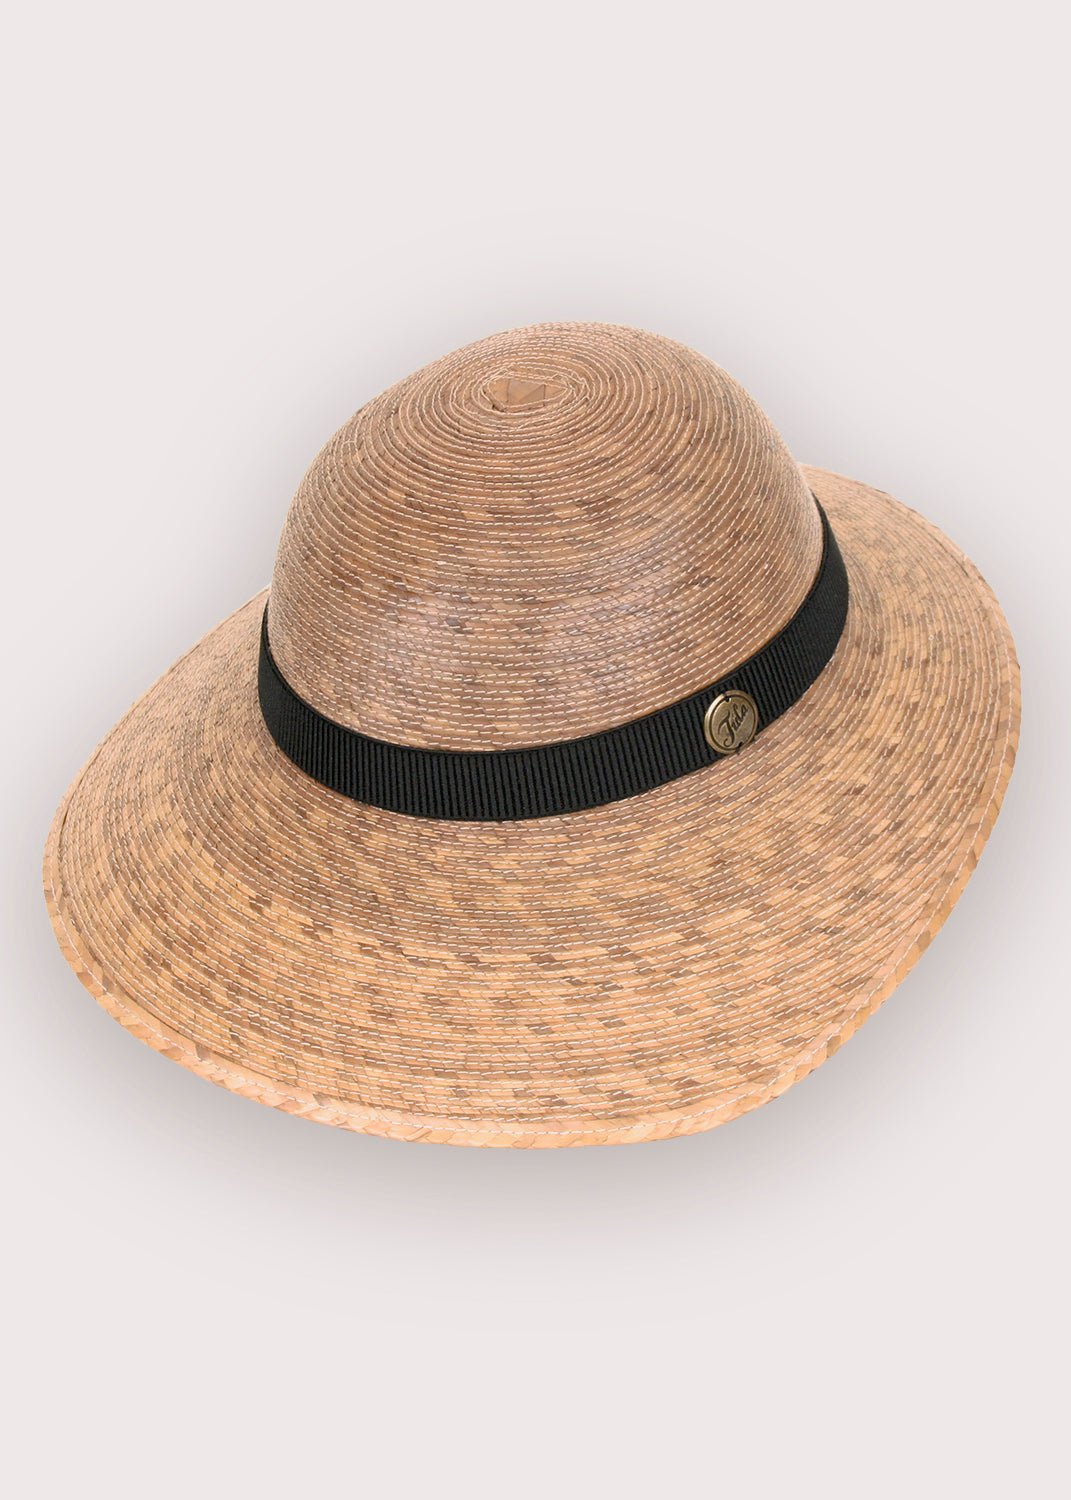 Extra Large Sun Hat for Big Heads, Wide Brim Sun Hat, Custom Hat